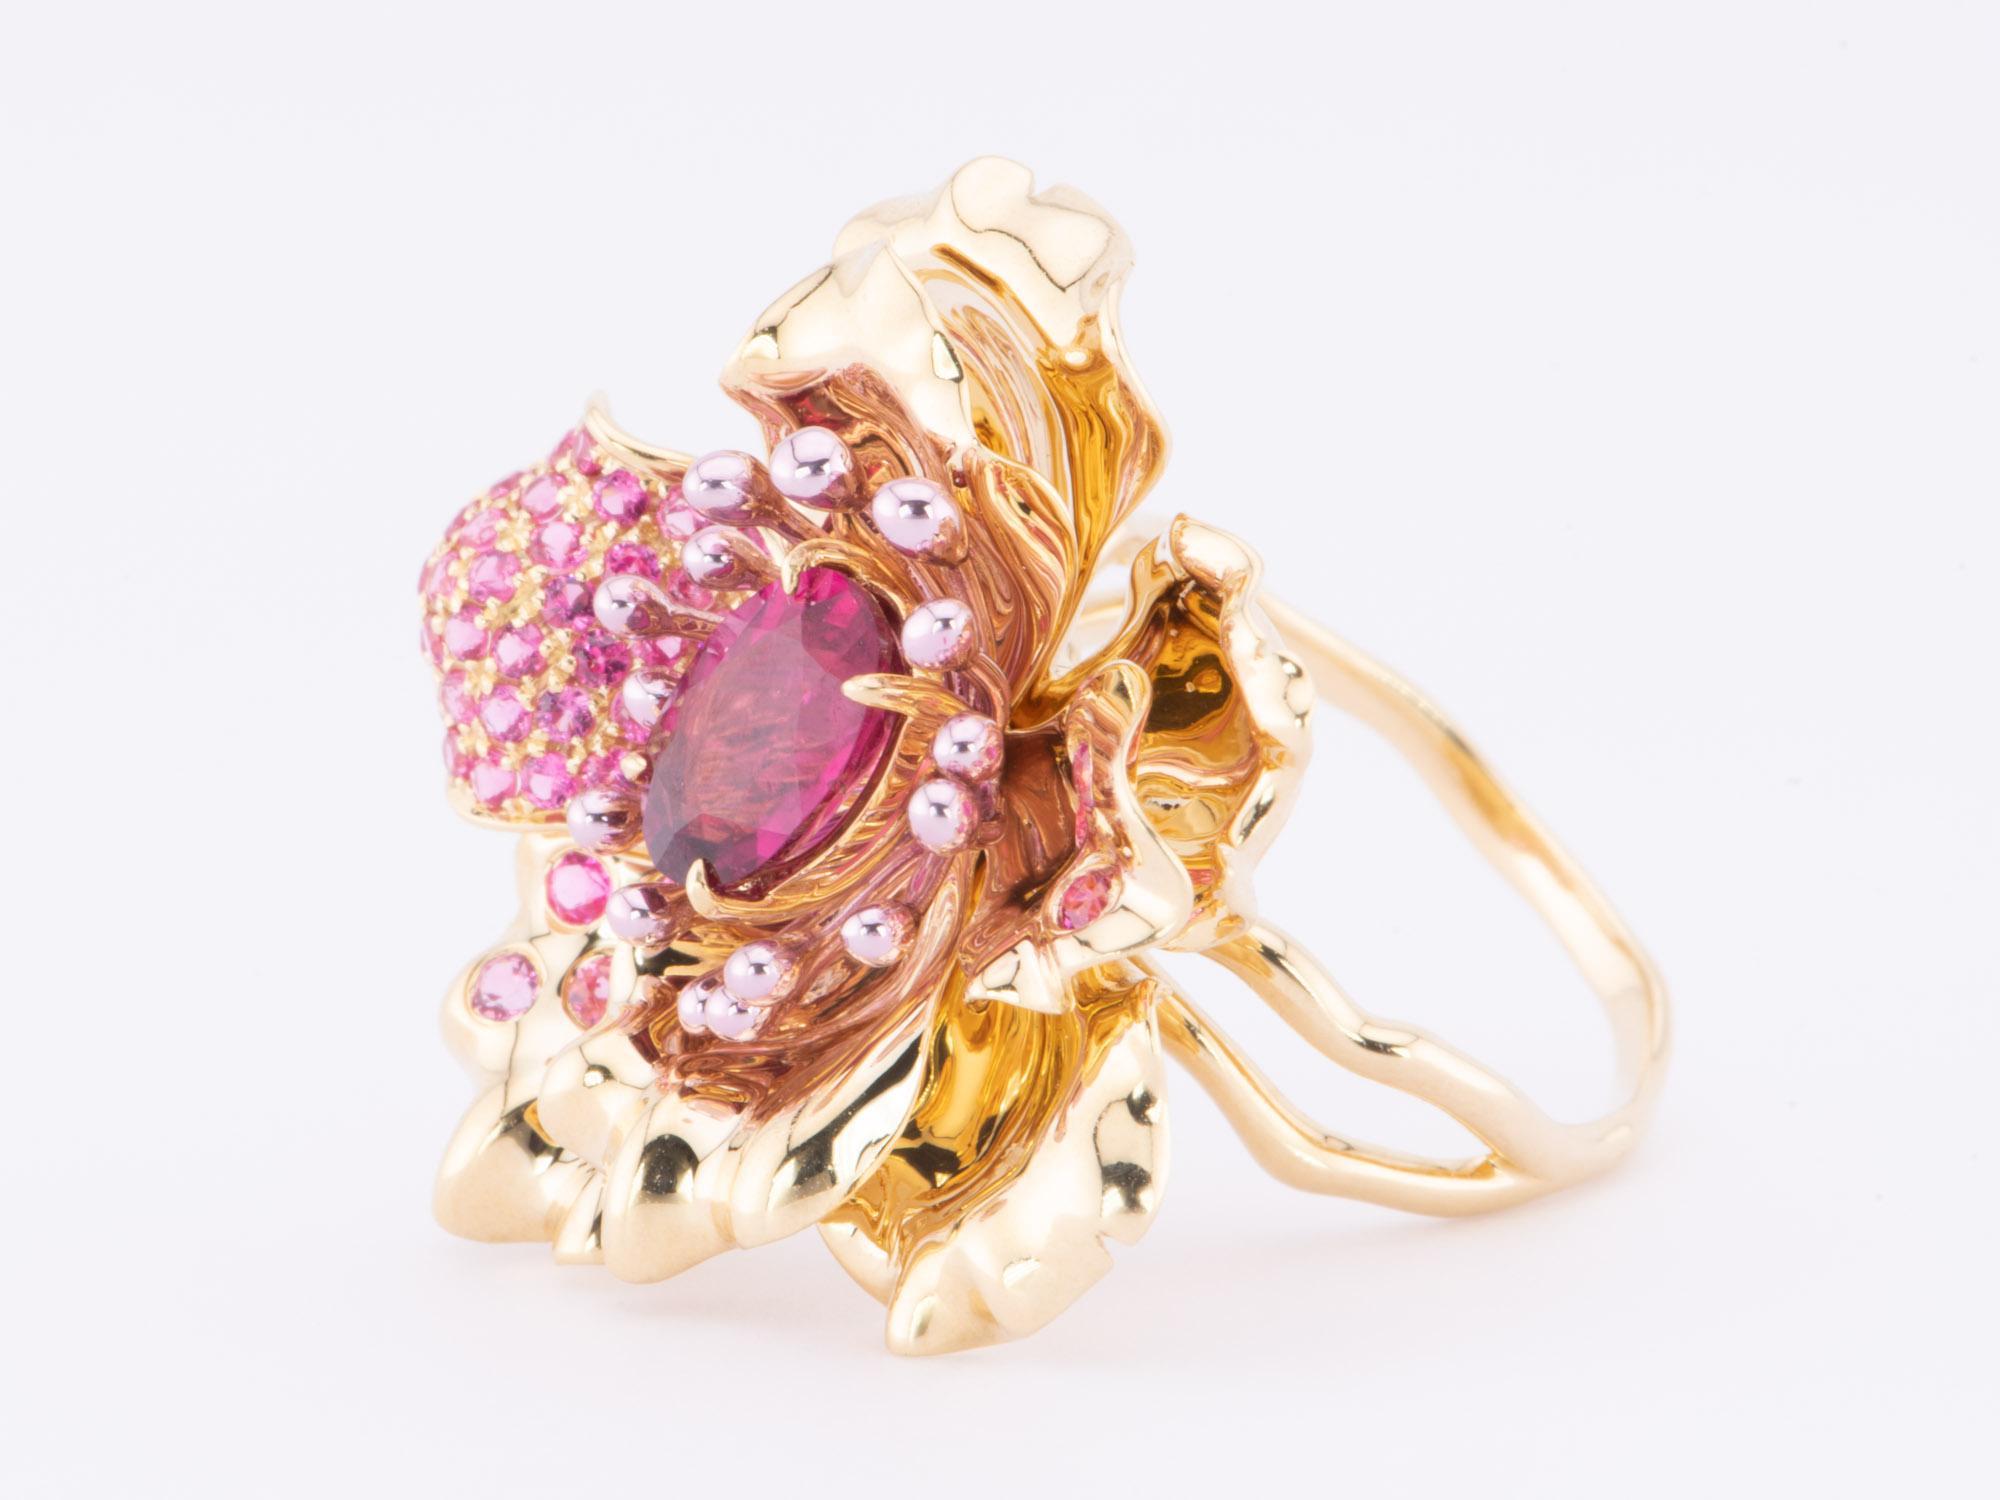 Art Jewelry Rubellite Tourmaline Center Flower Ring / Pendant 18K Gold R6641 For Sale 2